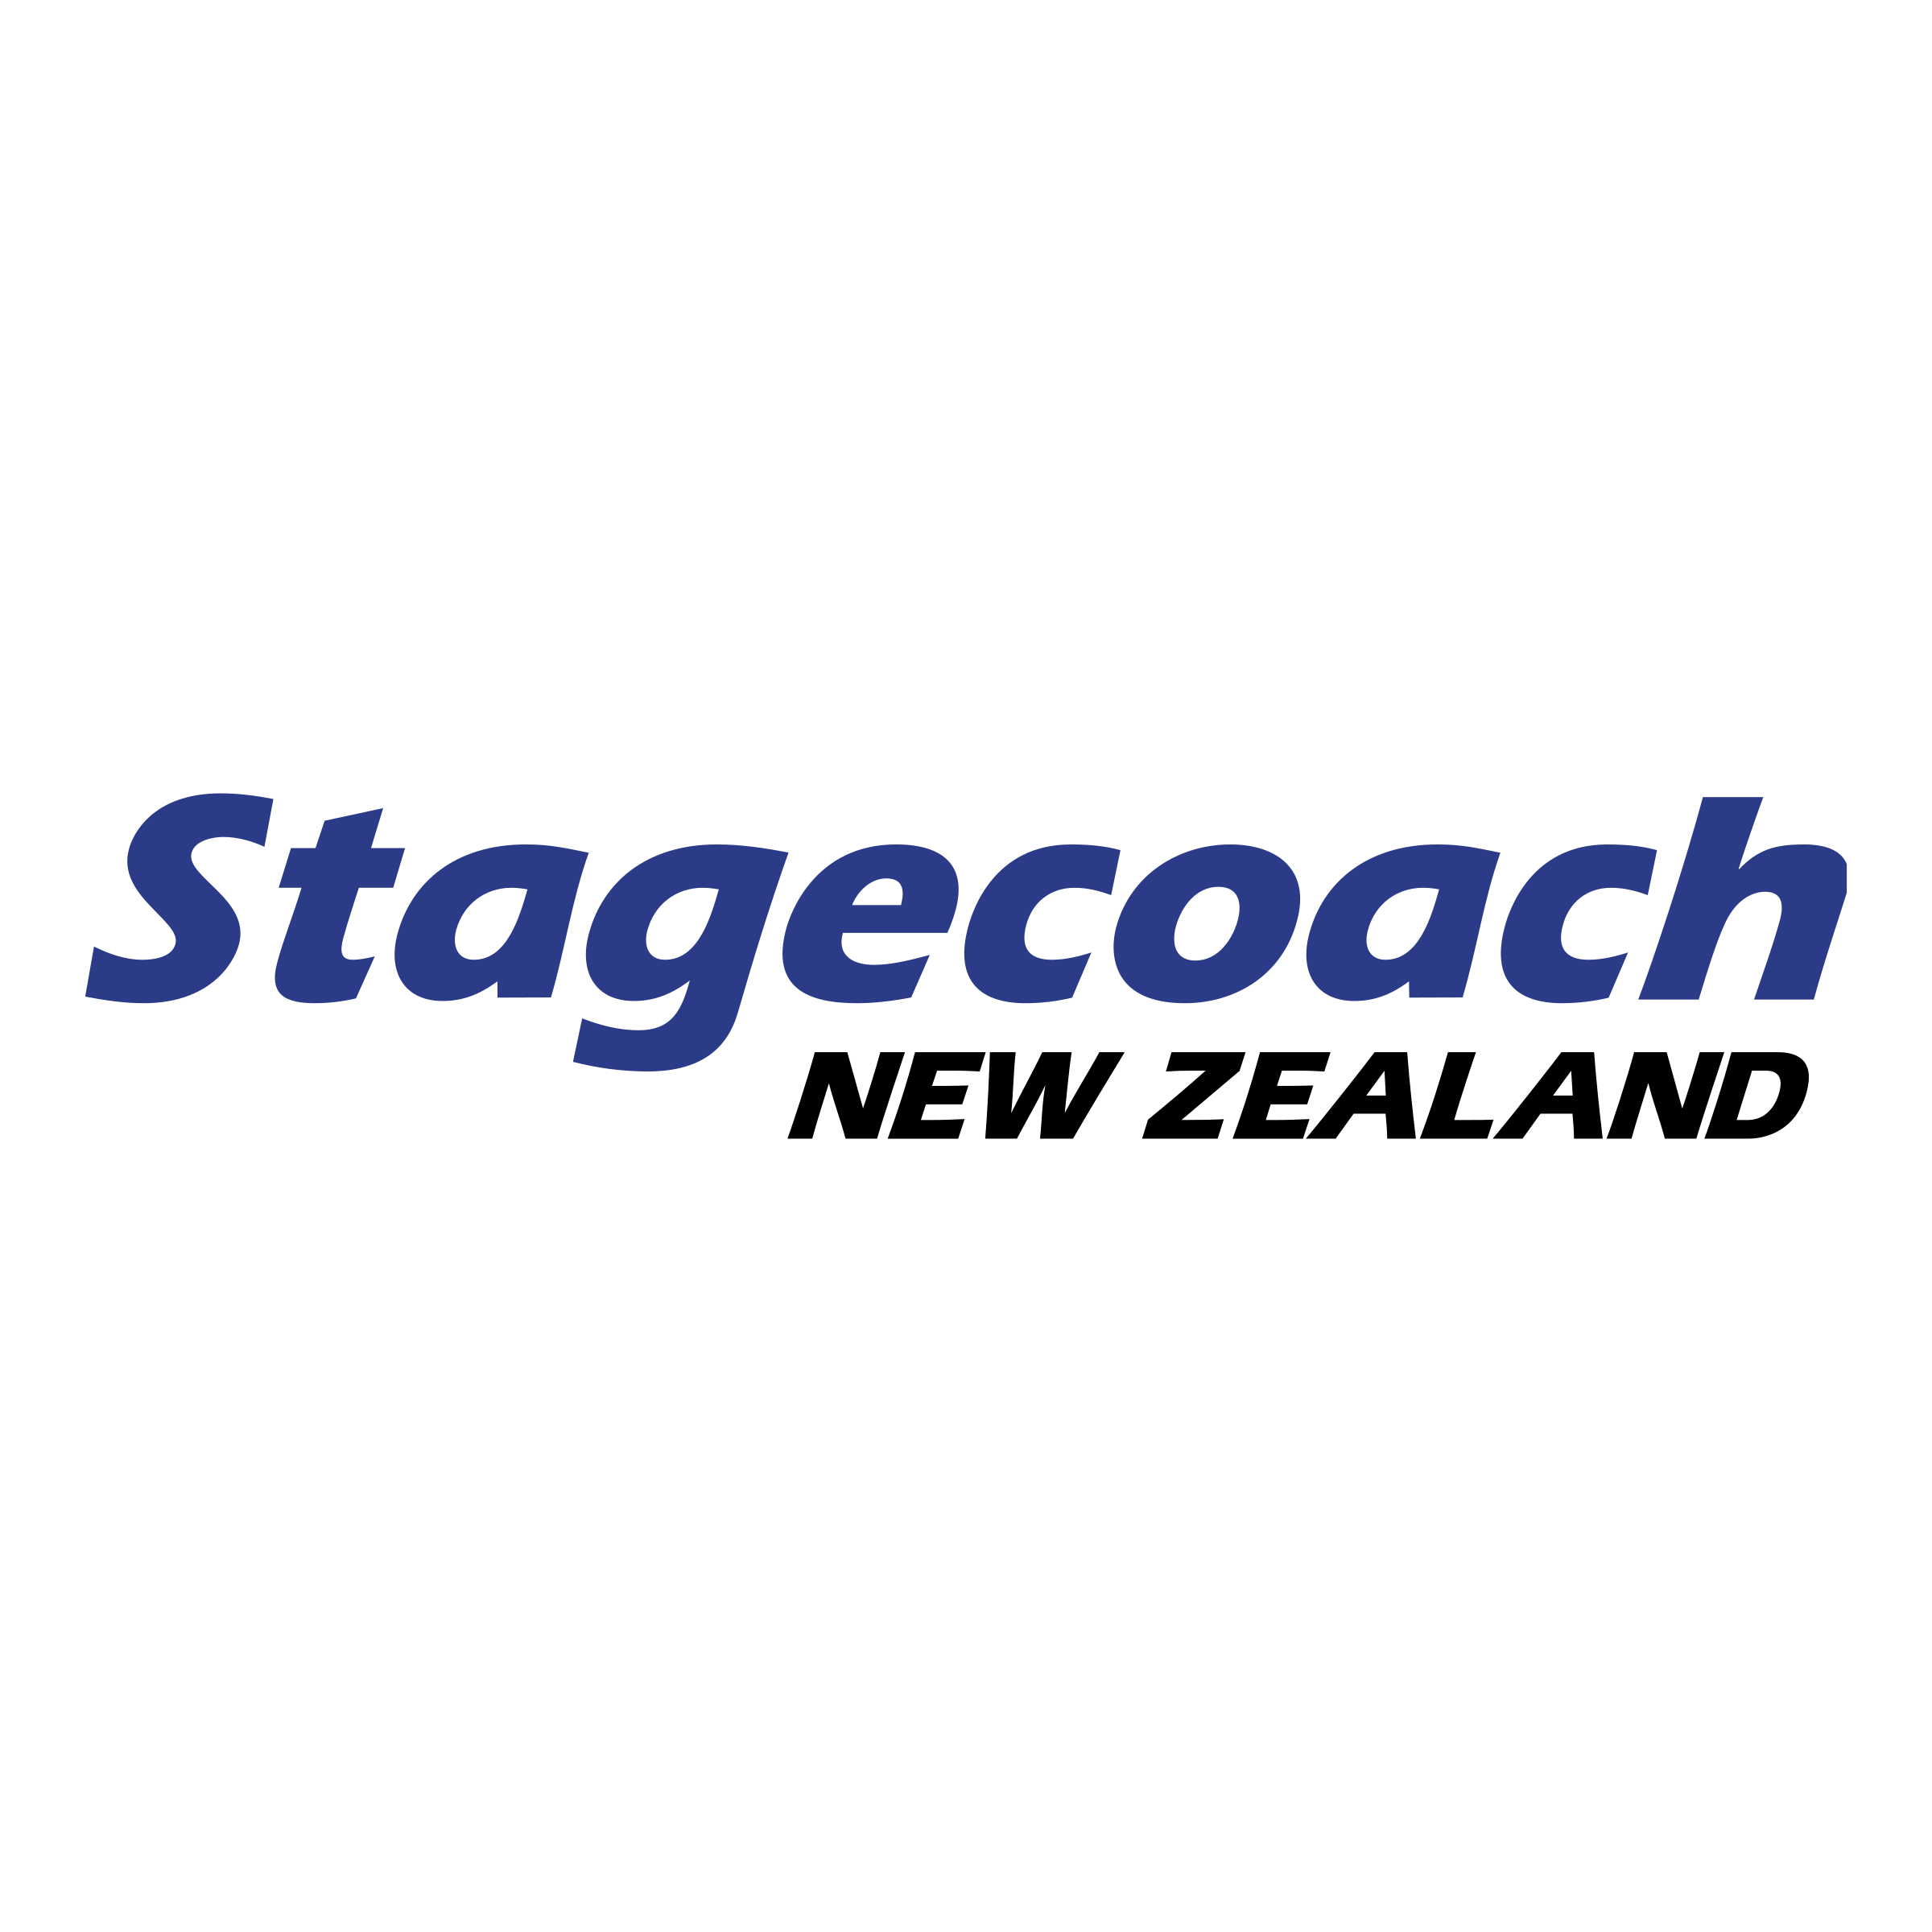 Stagecoach Logo - Stagecoach New Zealand Logo PNG Transparent & SVG Vector - Freebie ...